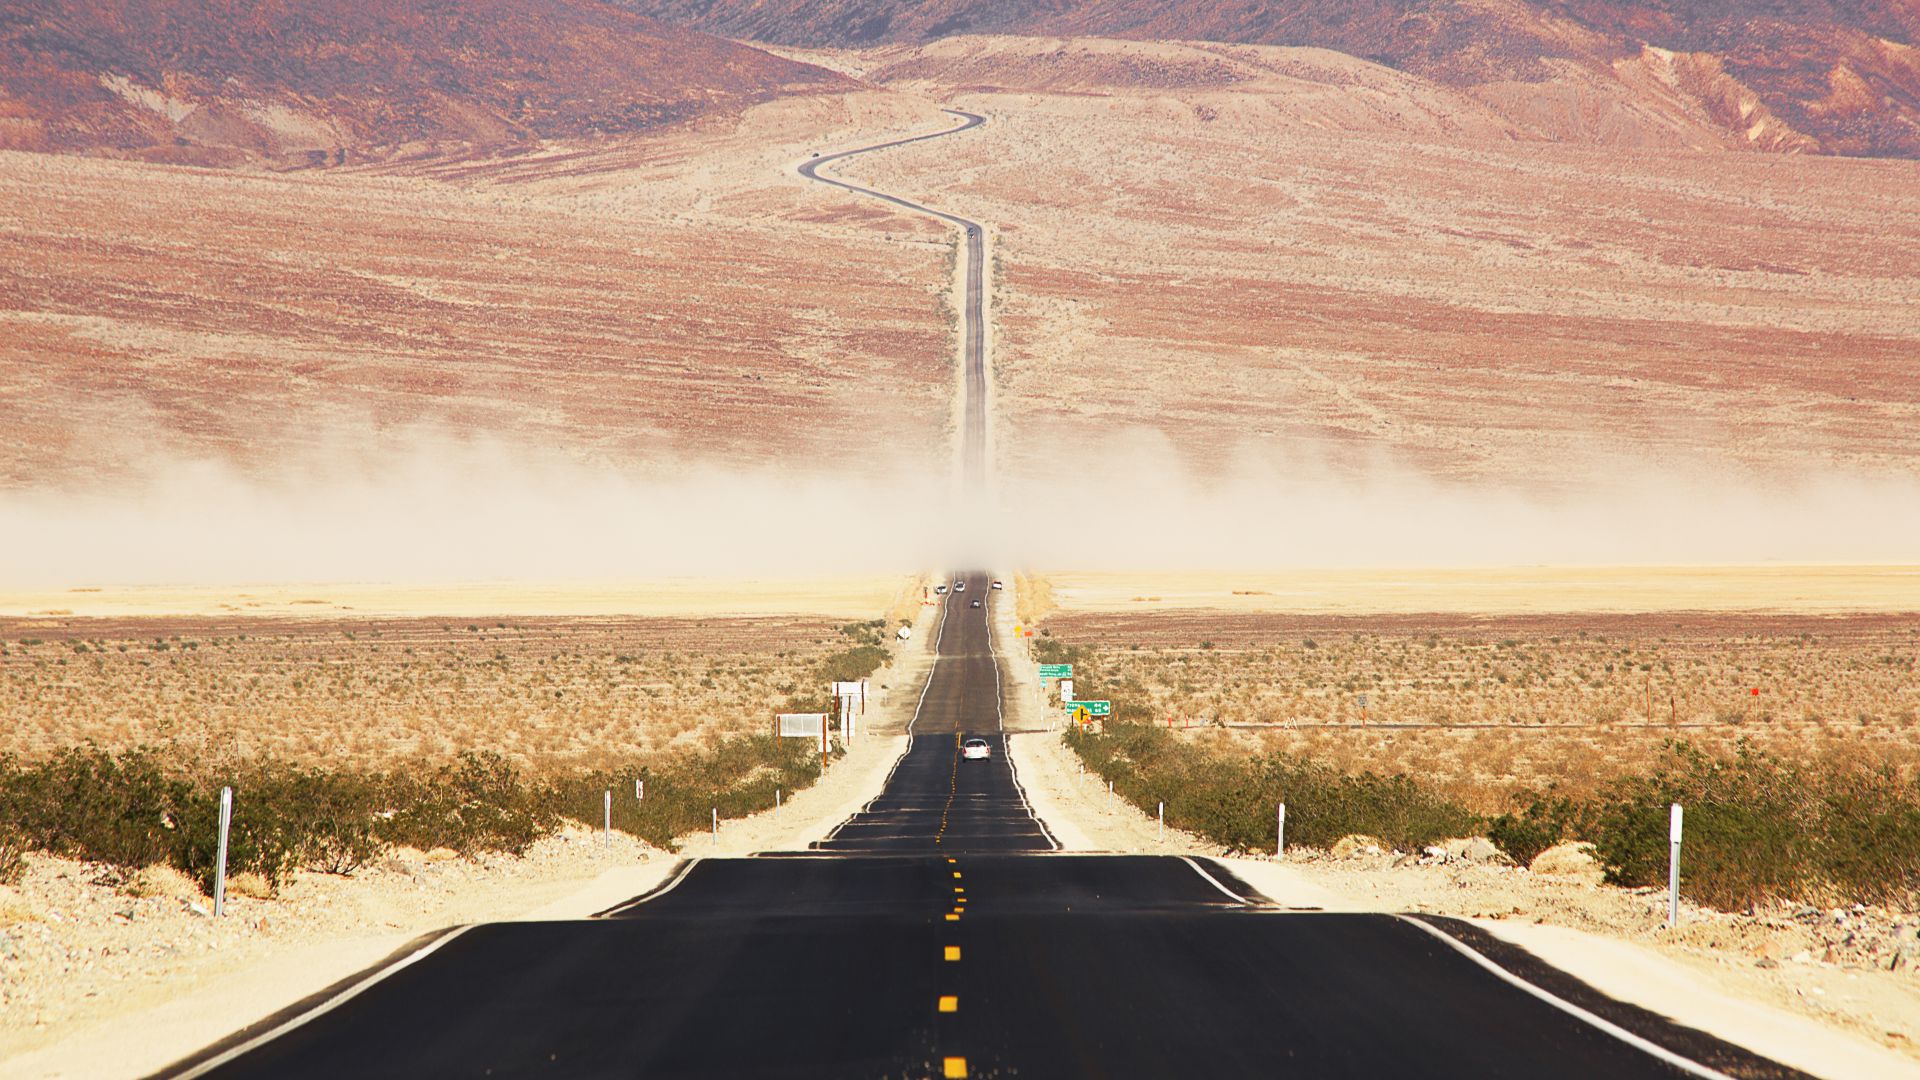 Калифорнийская пустыня, 4k, 5k, 8k, дорога, США, закат, Californian desert, 4k, 5k wallpaper, 8k, road, USA, sunset (horizontal)